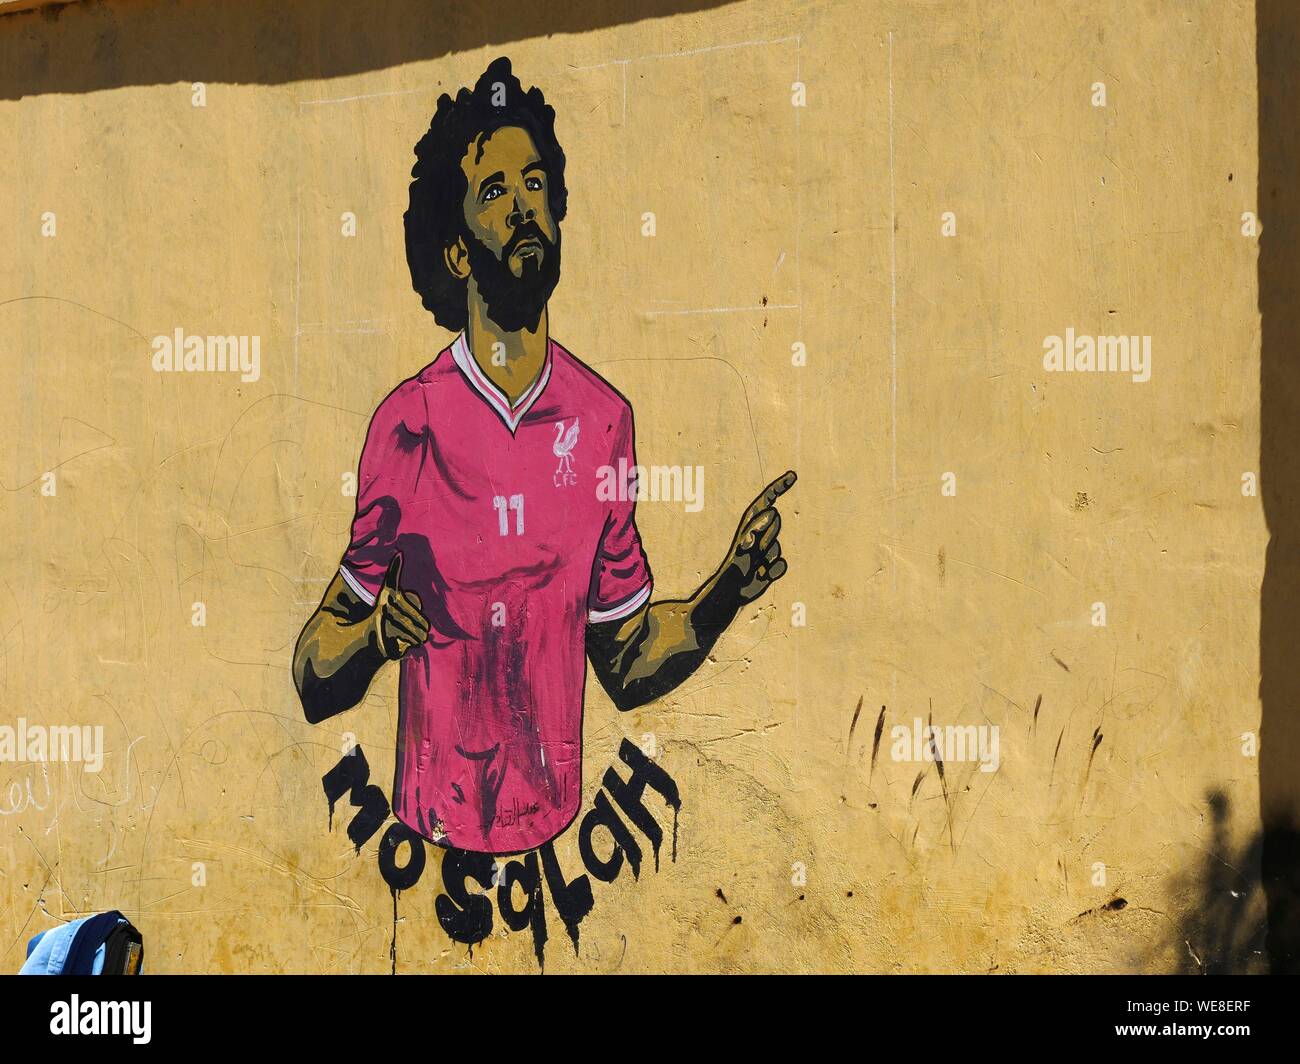 Egypt, Upper Egypt, Nubia, Nile Valley, Aswan, Mural in downtown Aswan representing Egyptian football player Mohammed Salah Stock Photo